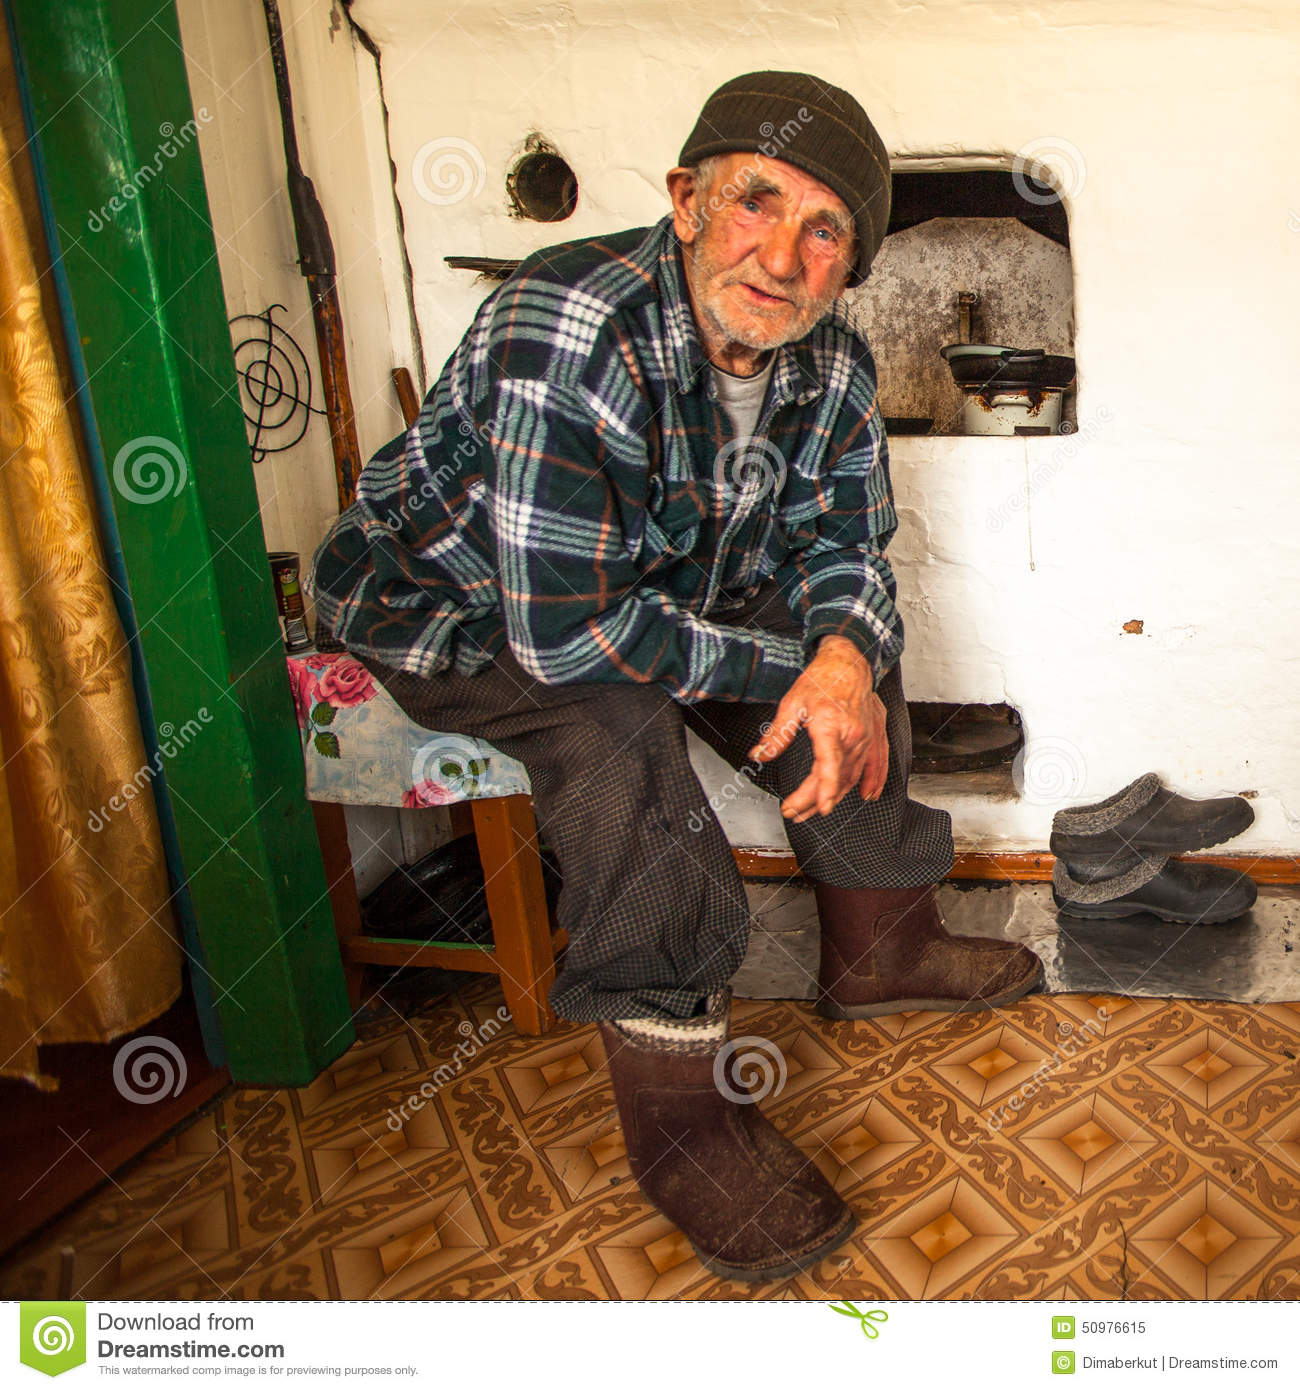 old-man-veps-small-finno-ugric-people-living-territory-leningrad-region-russia-vinnitsy-circa-...jpg